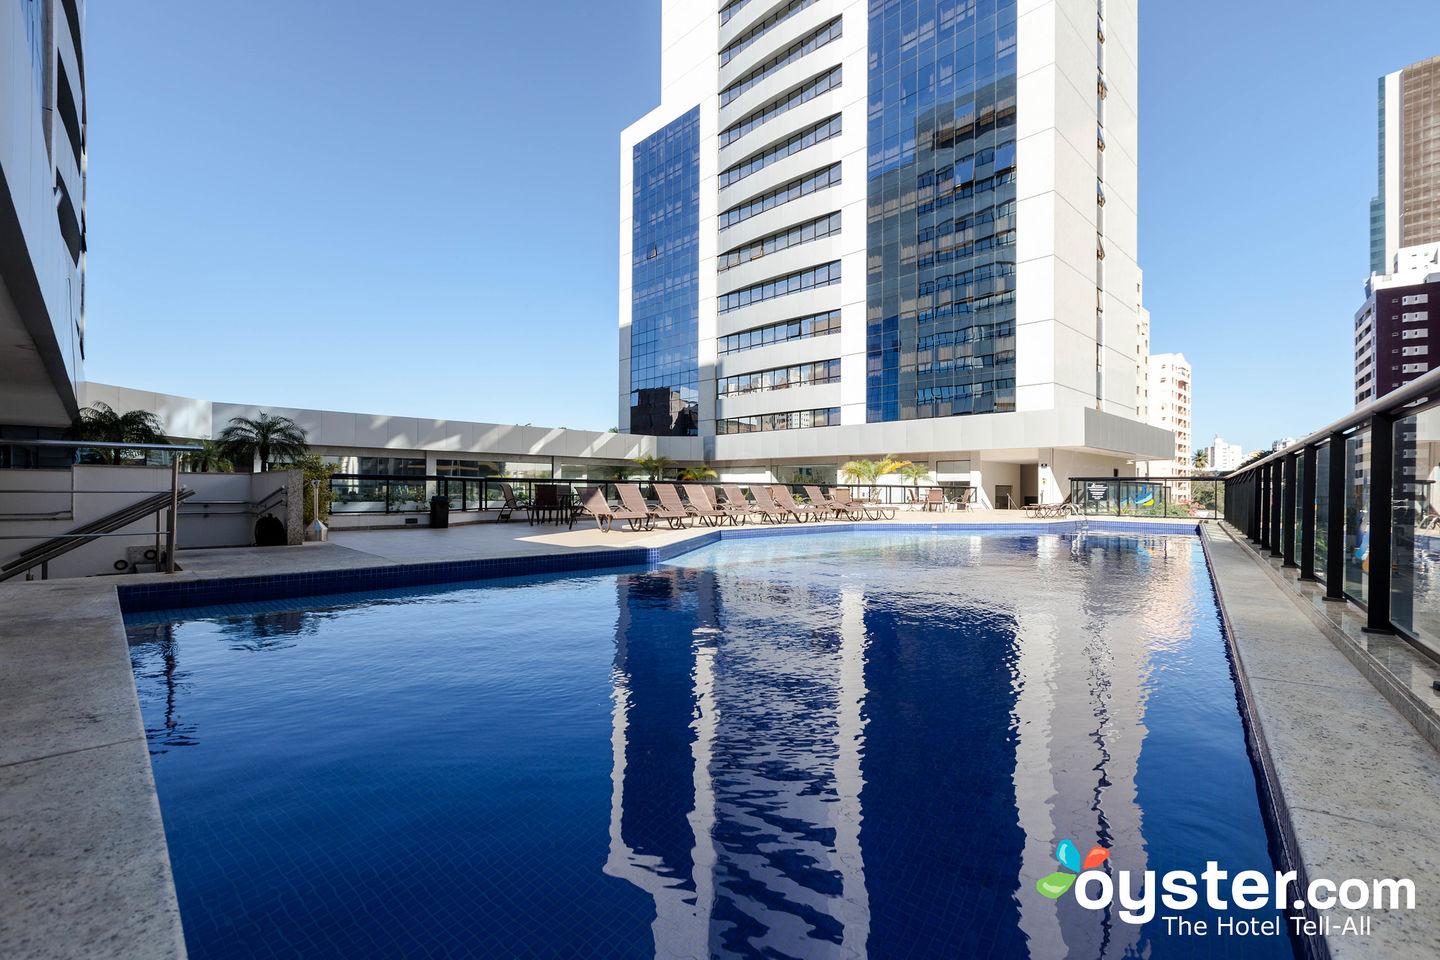 Quality Hotel Su  tes S  o Salvador Review  What REALLY Expect